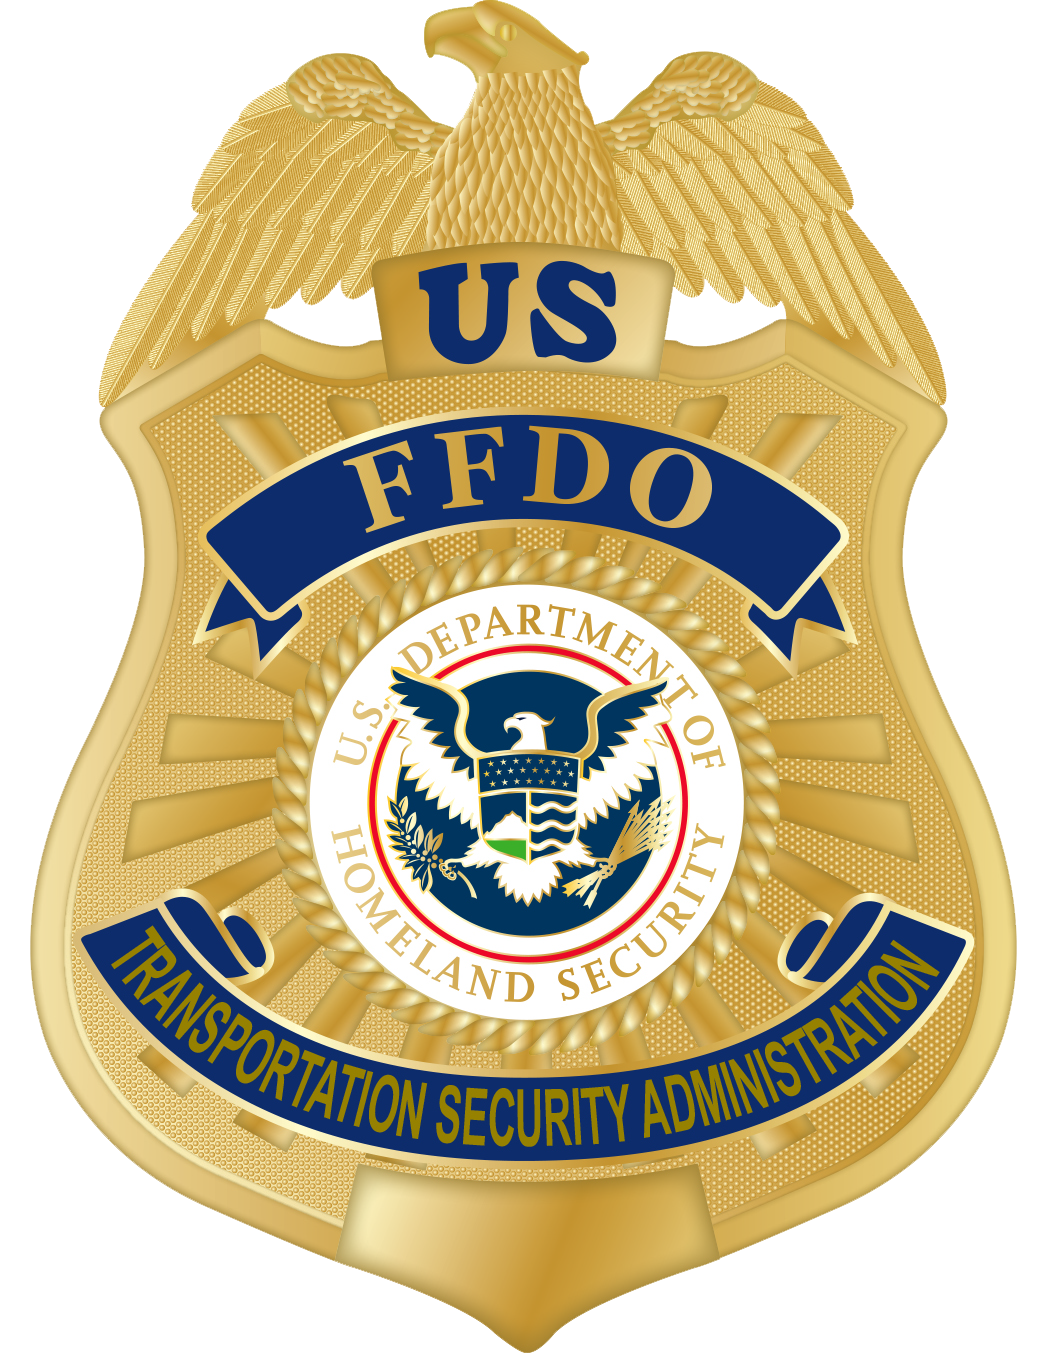 A Federal Flight Deck Officer badge.